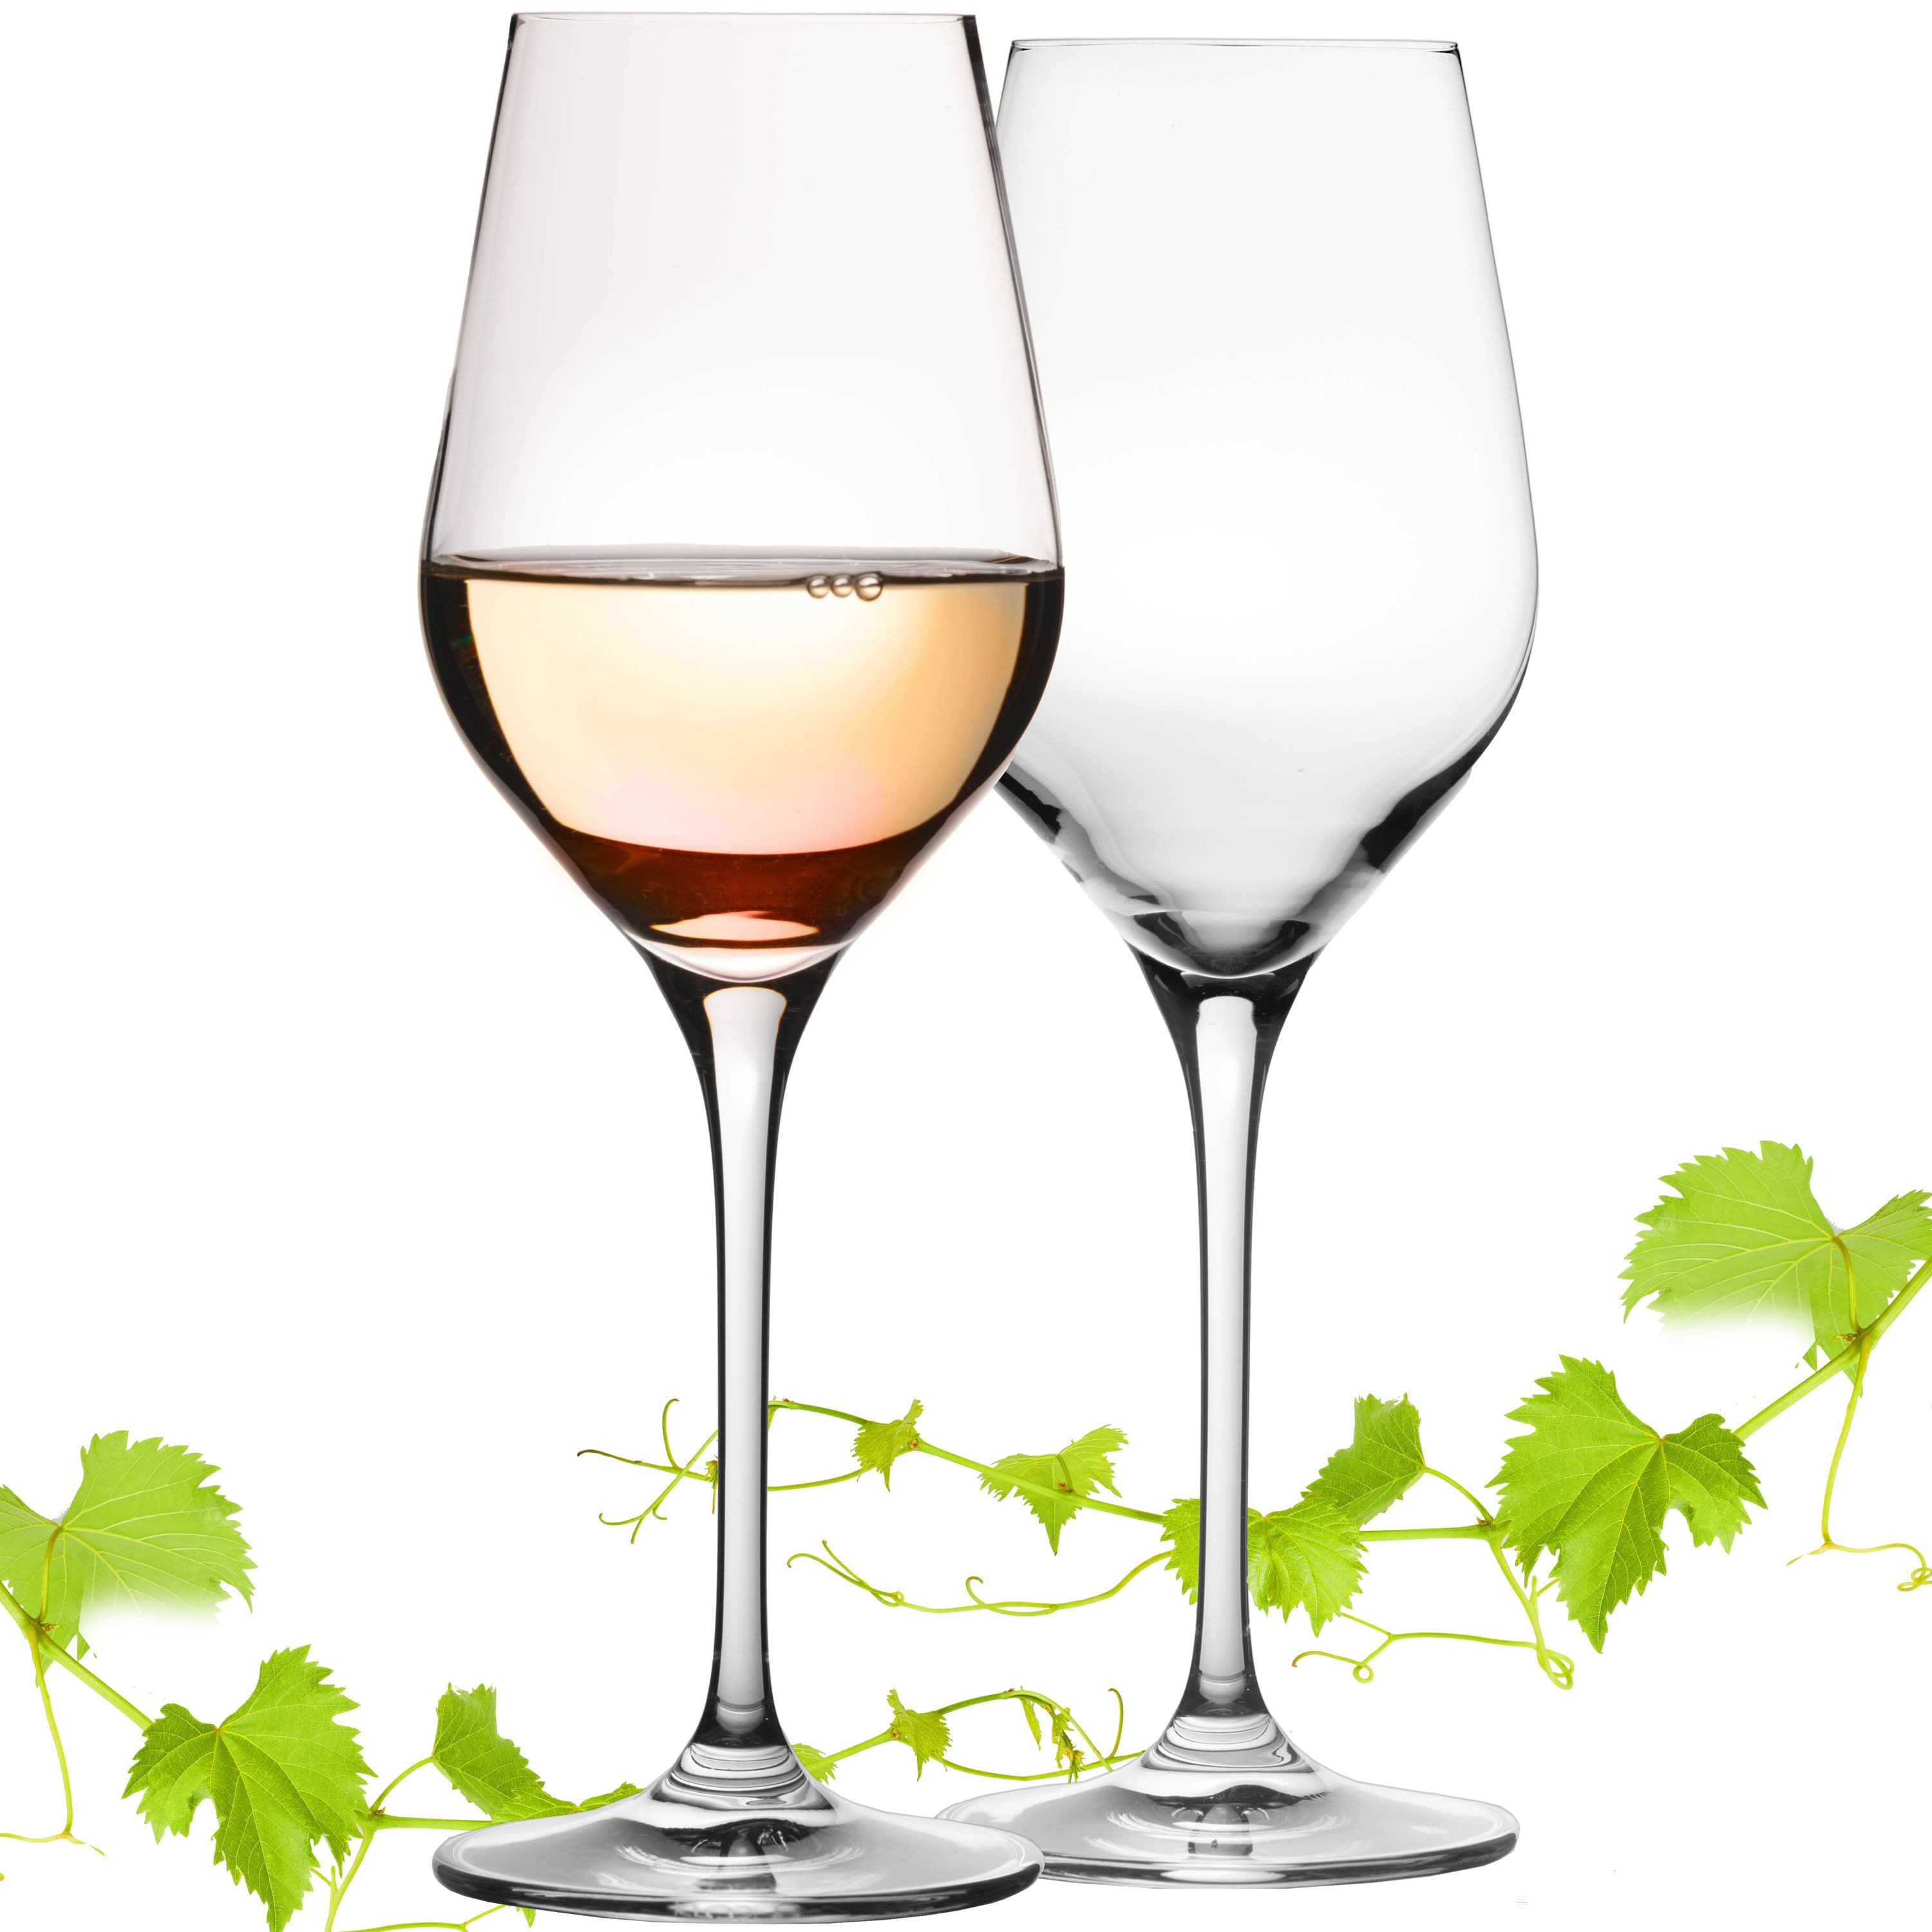 IMPERIAL glass Weinglas Weißweingläser 200ml "Sydney" Set 2-Teilig, Crystalline Glas, Riesling Glas aus Crystalline Glas Weingläser Spülmaschinenfest